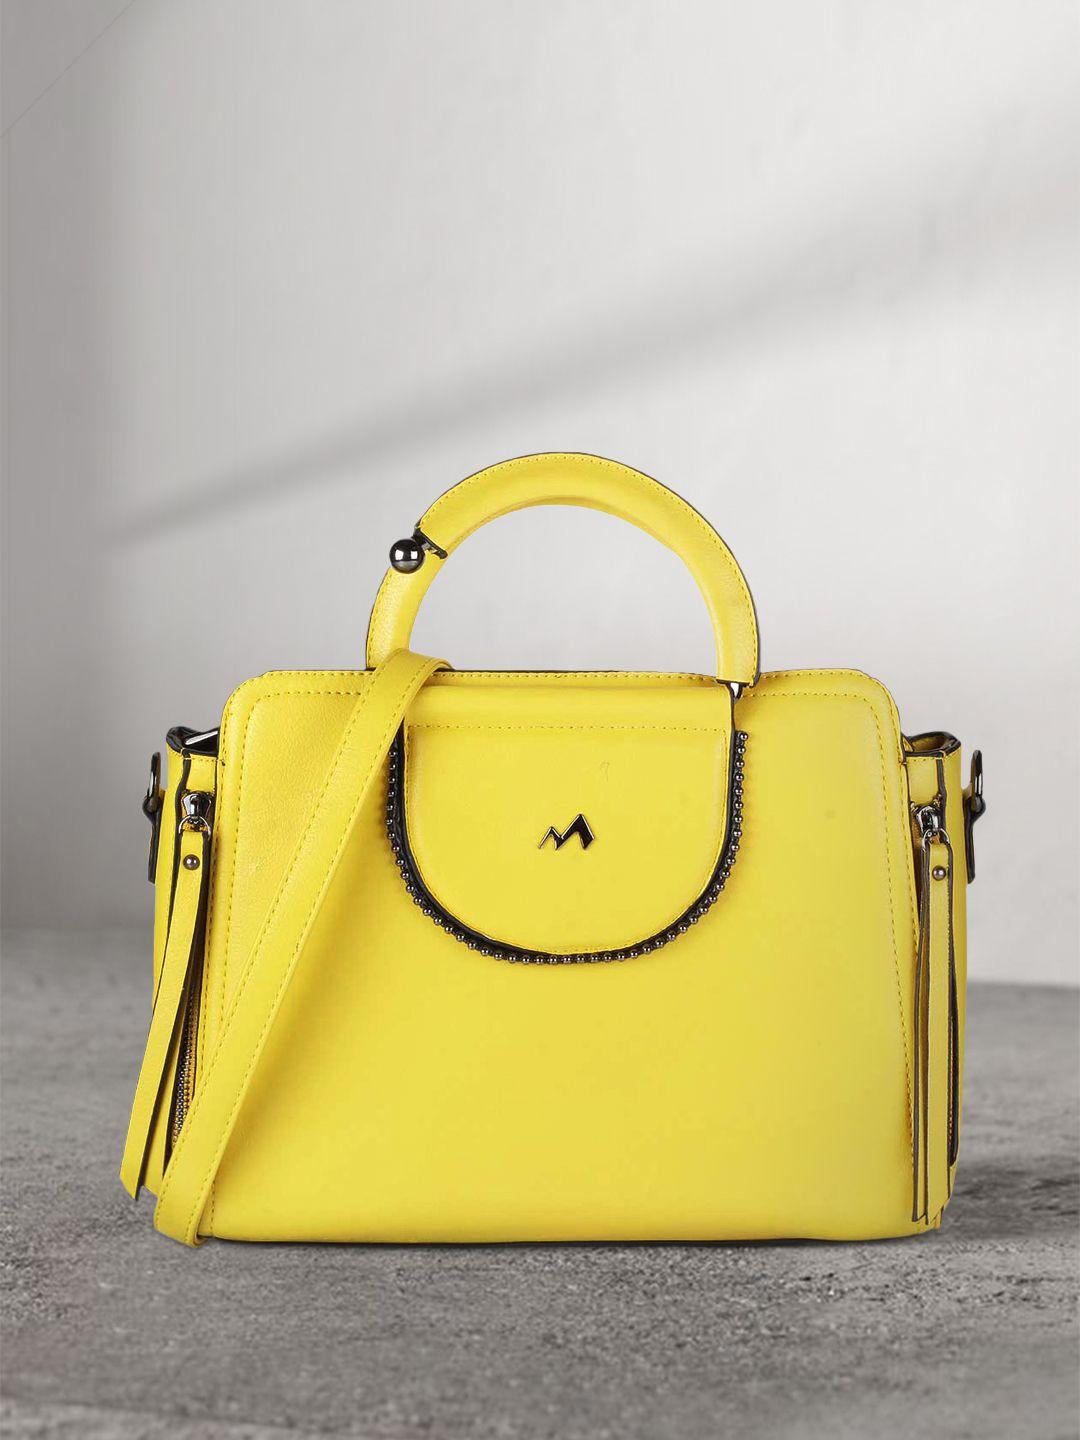 metro women yellow structured handheld bag with tassels